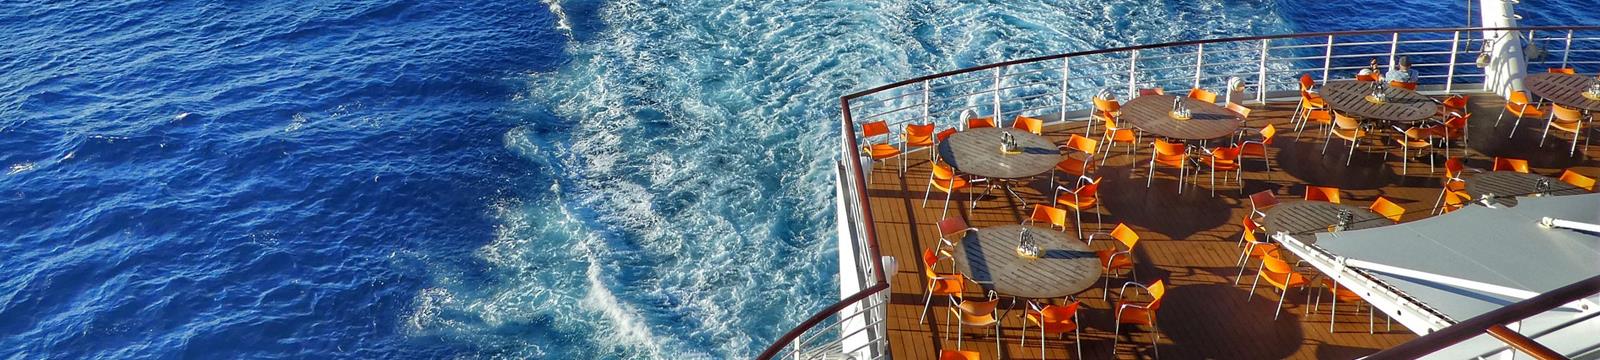 Royal Caribbean Cruise Packages | Royal Caribbean | Royal Caribbean